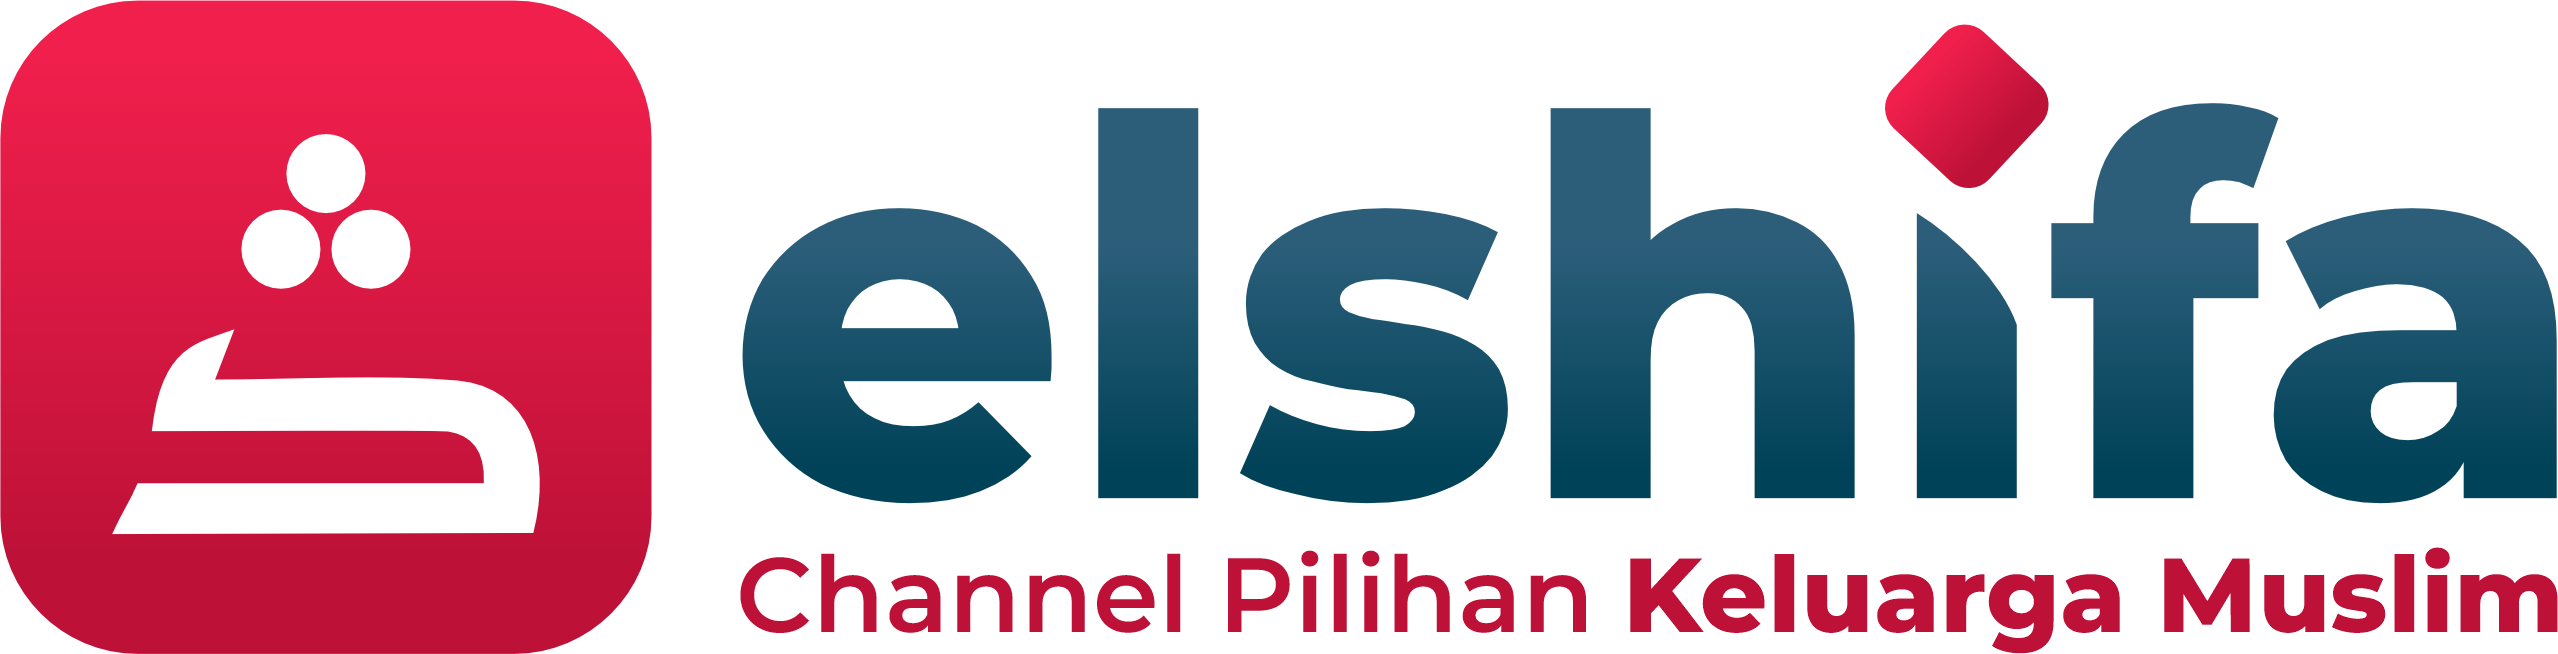 26. Logo Eslhifa Tv NEW